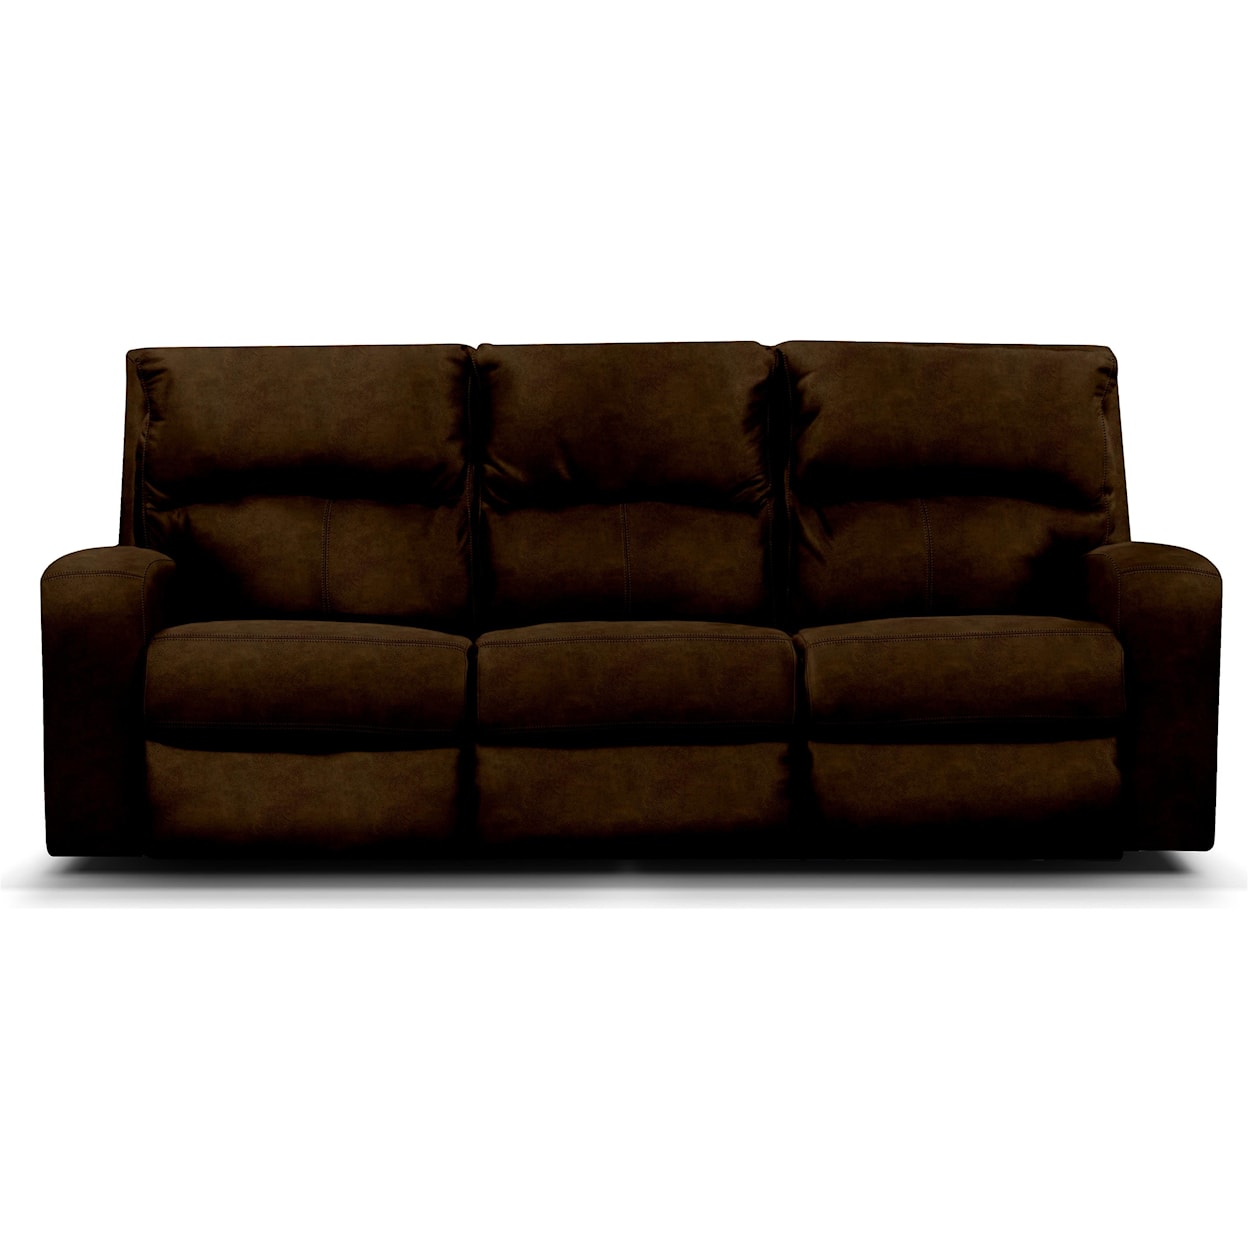 England EZ2200/H Series Dual Reclining Sofa